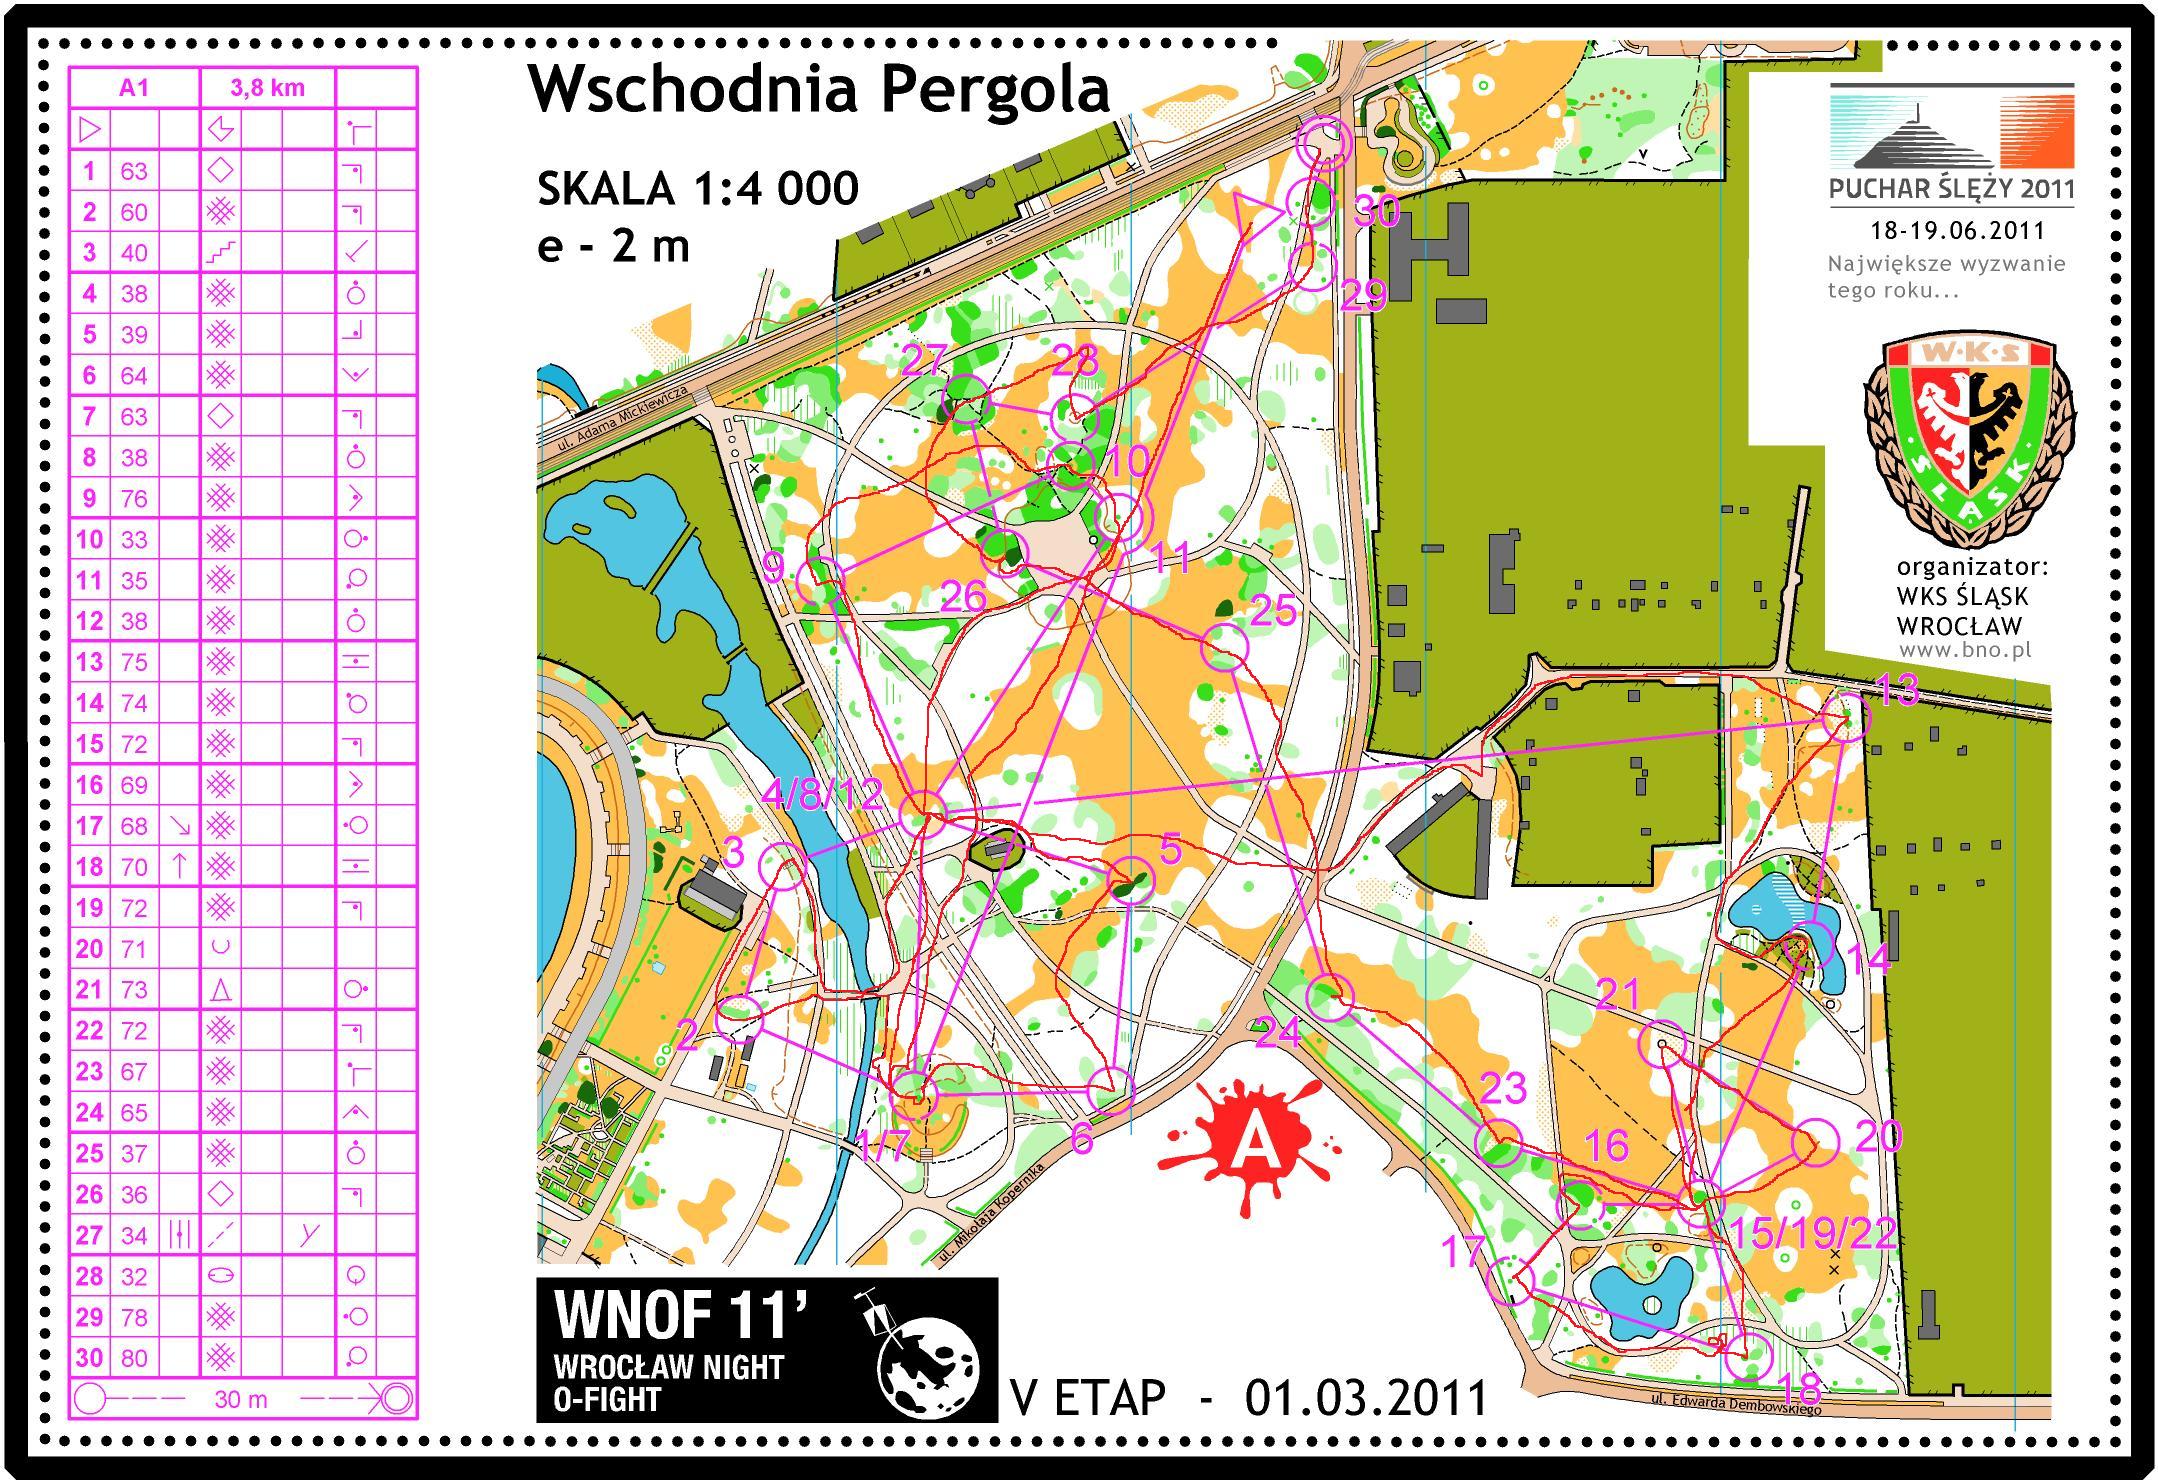 Wroclaw Night Orienteering Fight (01-03-2011)